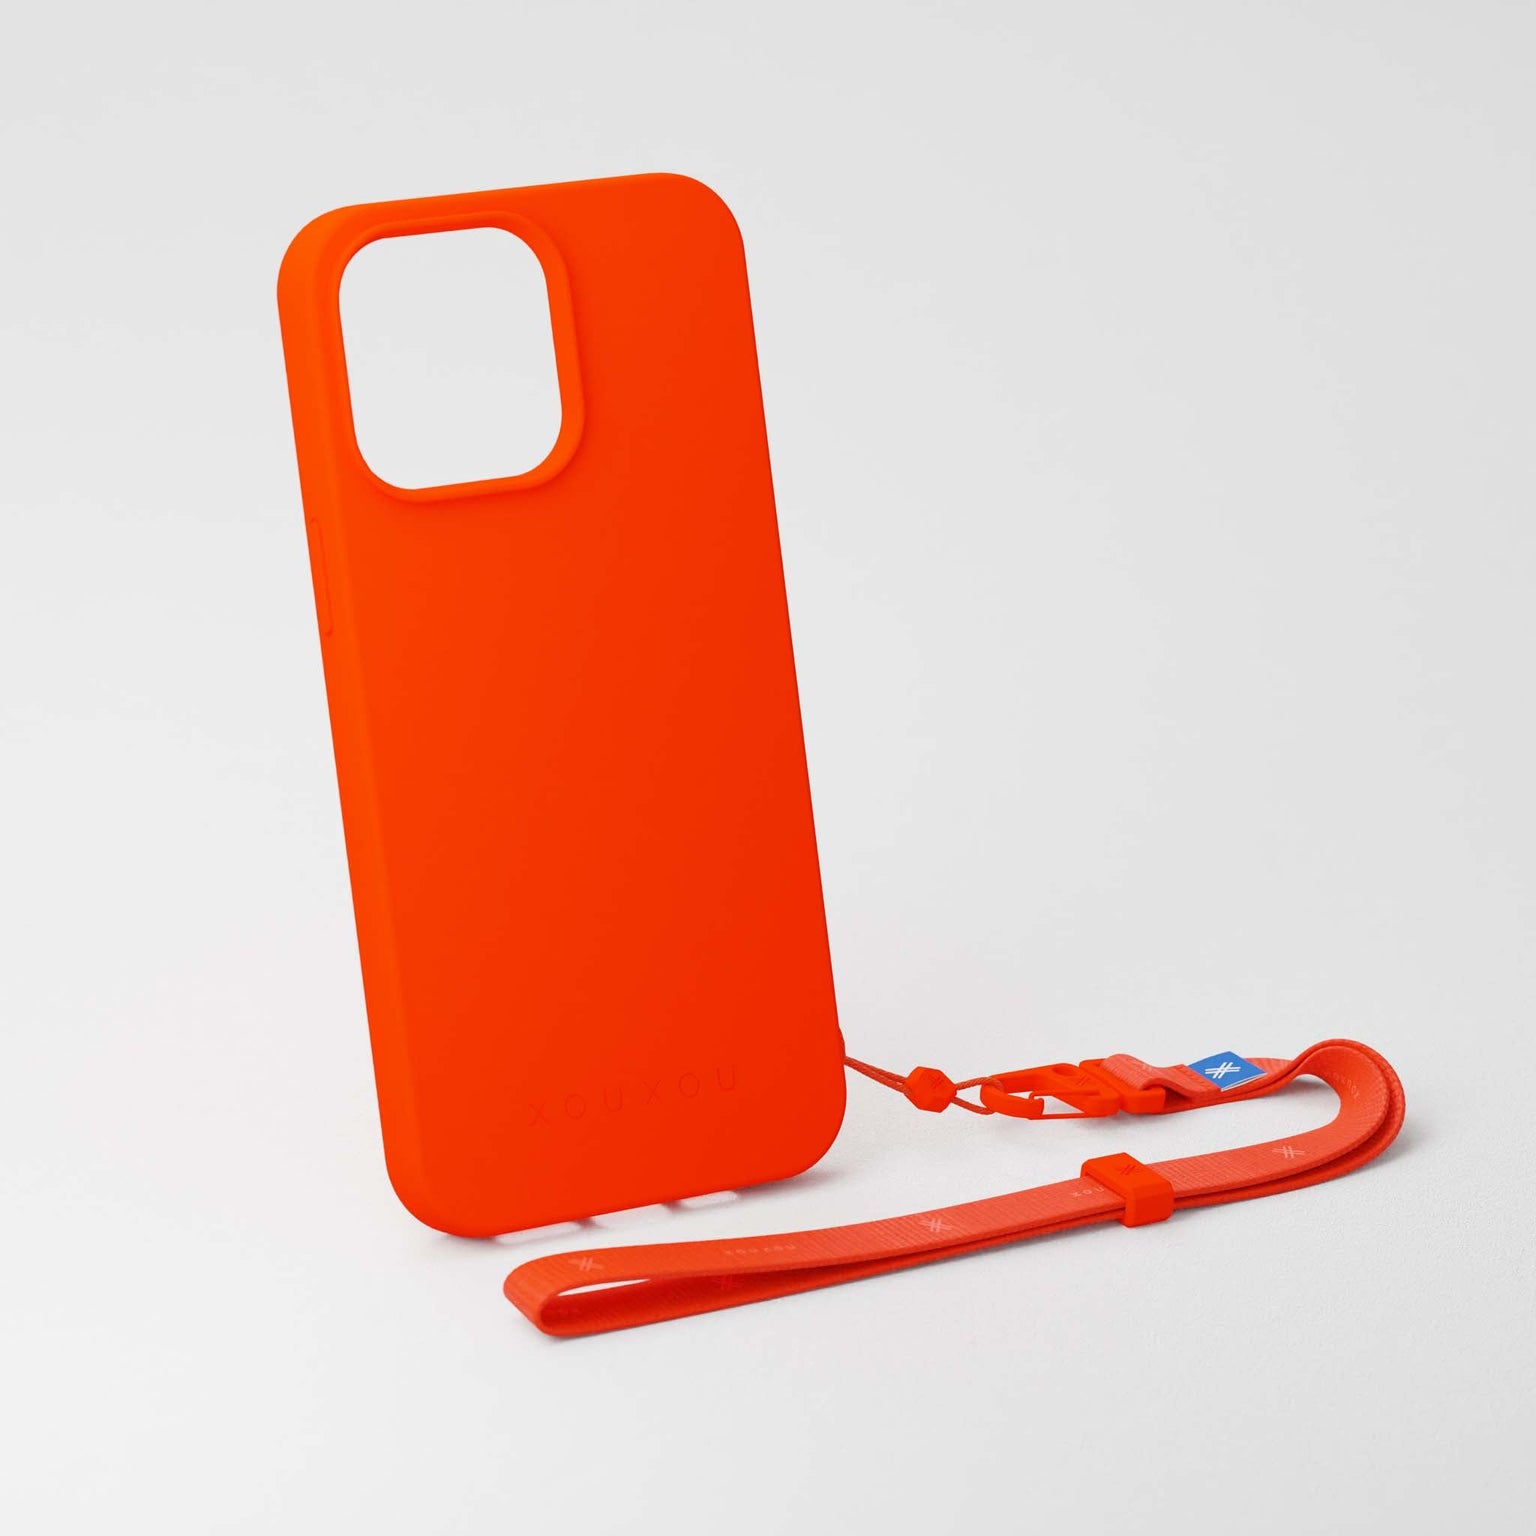 iPhone Case Neon Orange with Wrist Strap | XOUXOU